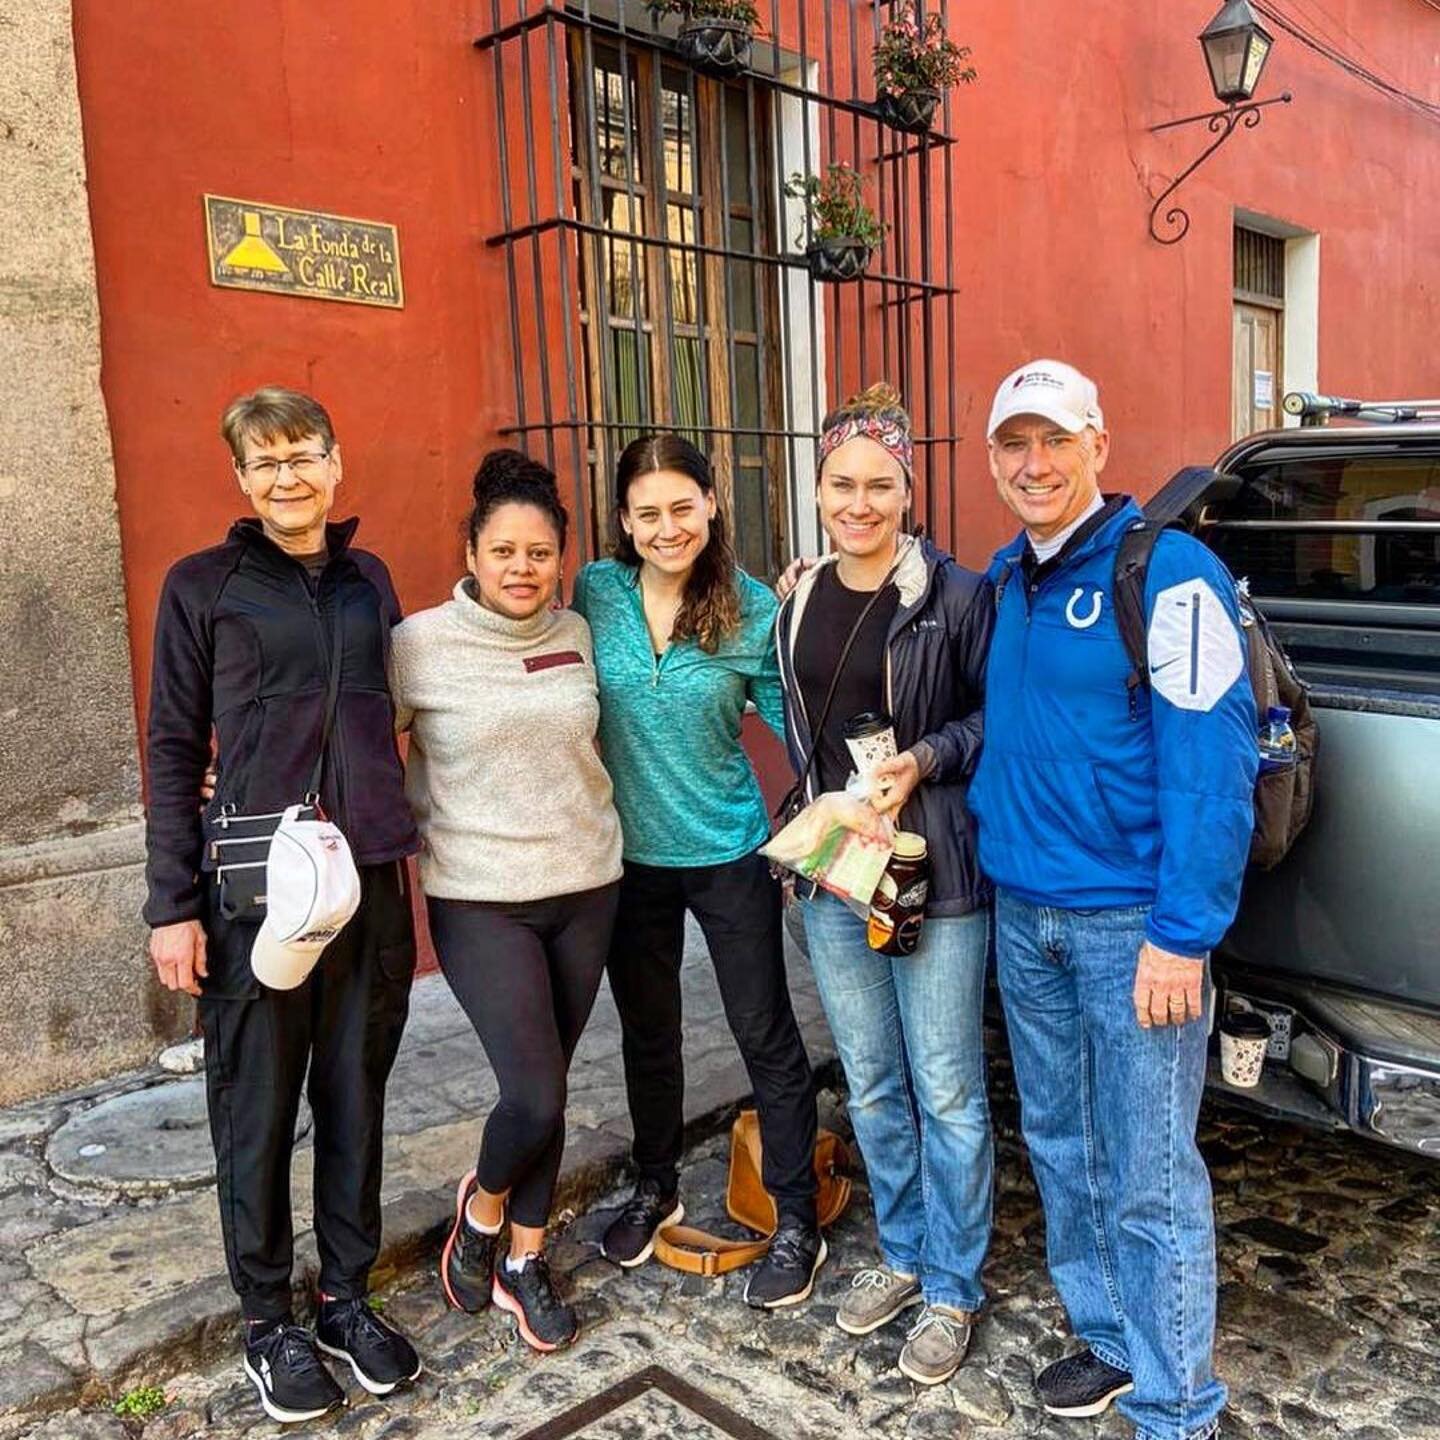 Family trip in Antigua Guatemala&hellip; 
.
.
.
.
.
#mayantrip #guatemala #antiguaguatemala #visitguatemala #familygoals #familytime #travelwithkids #familytravel